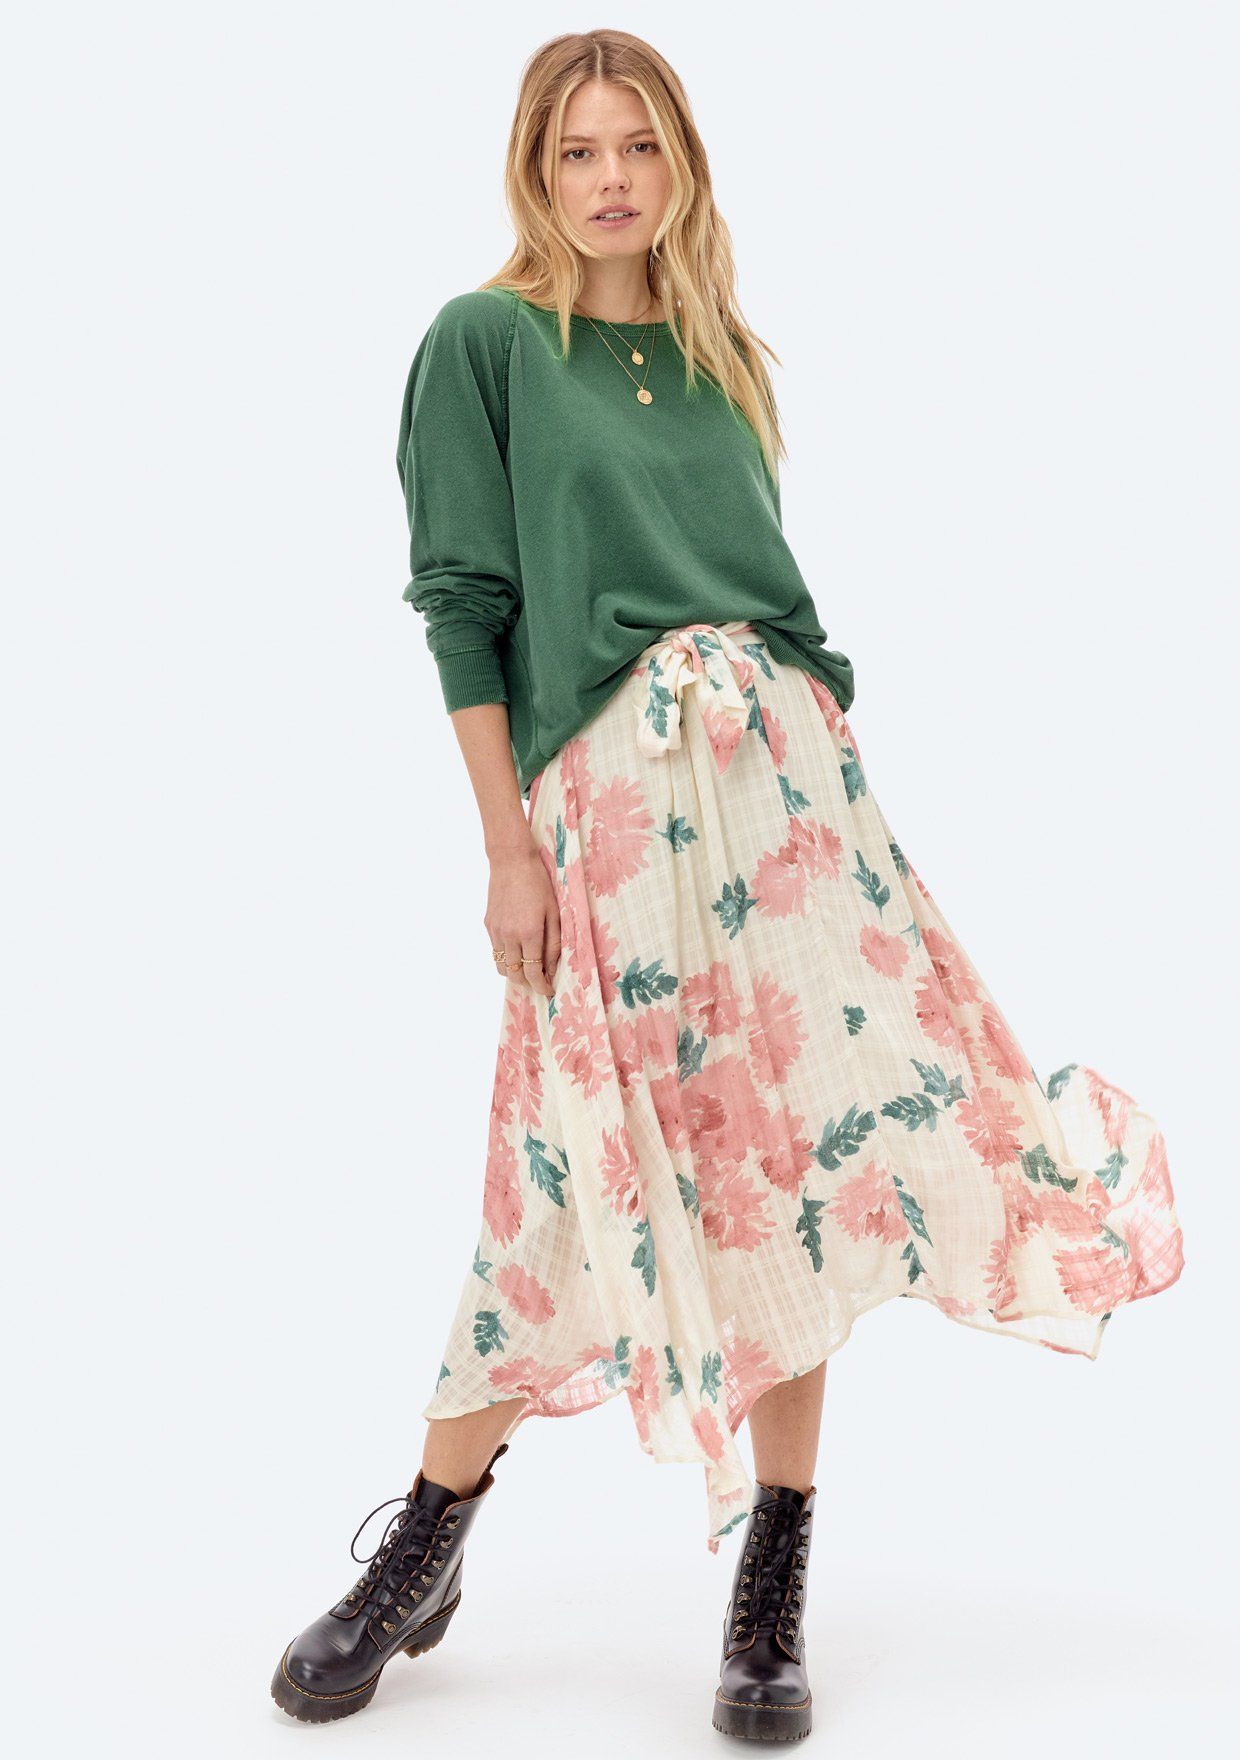 flowy floral skirt